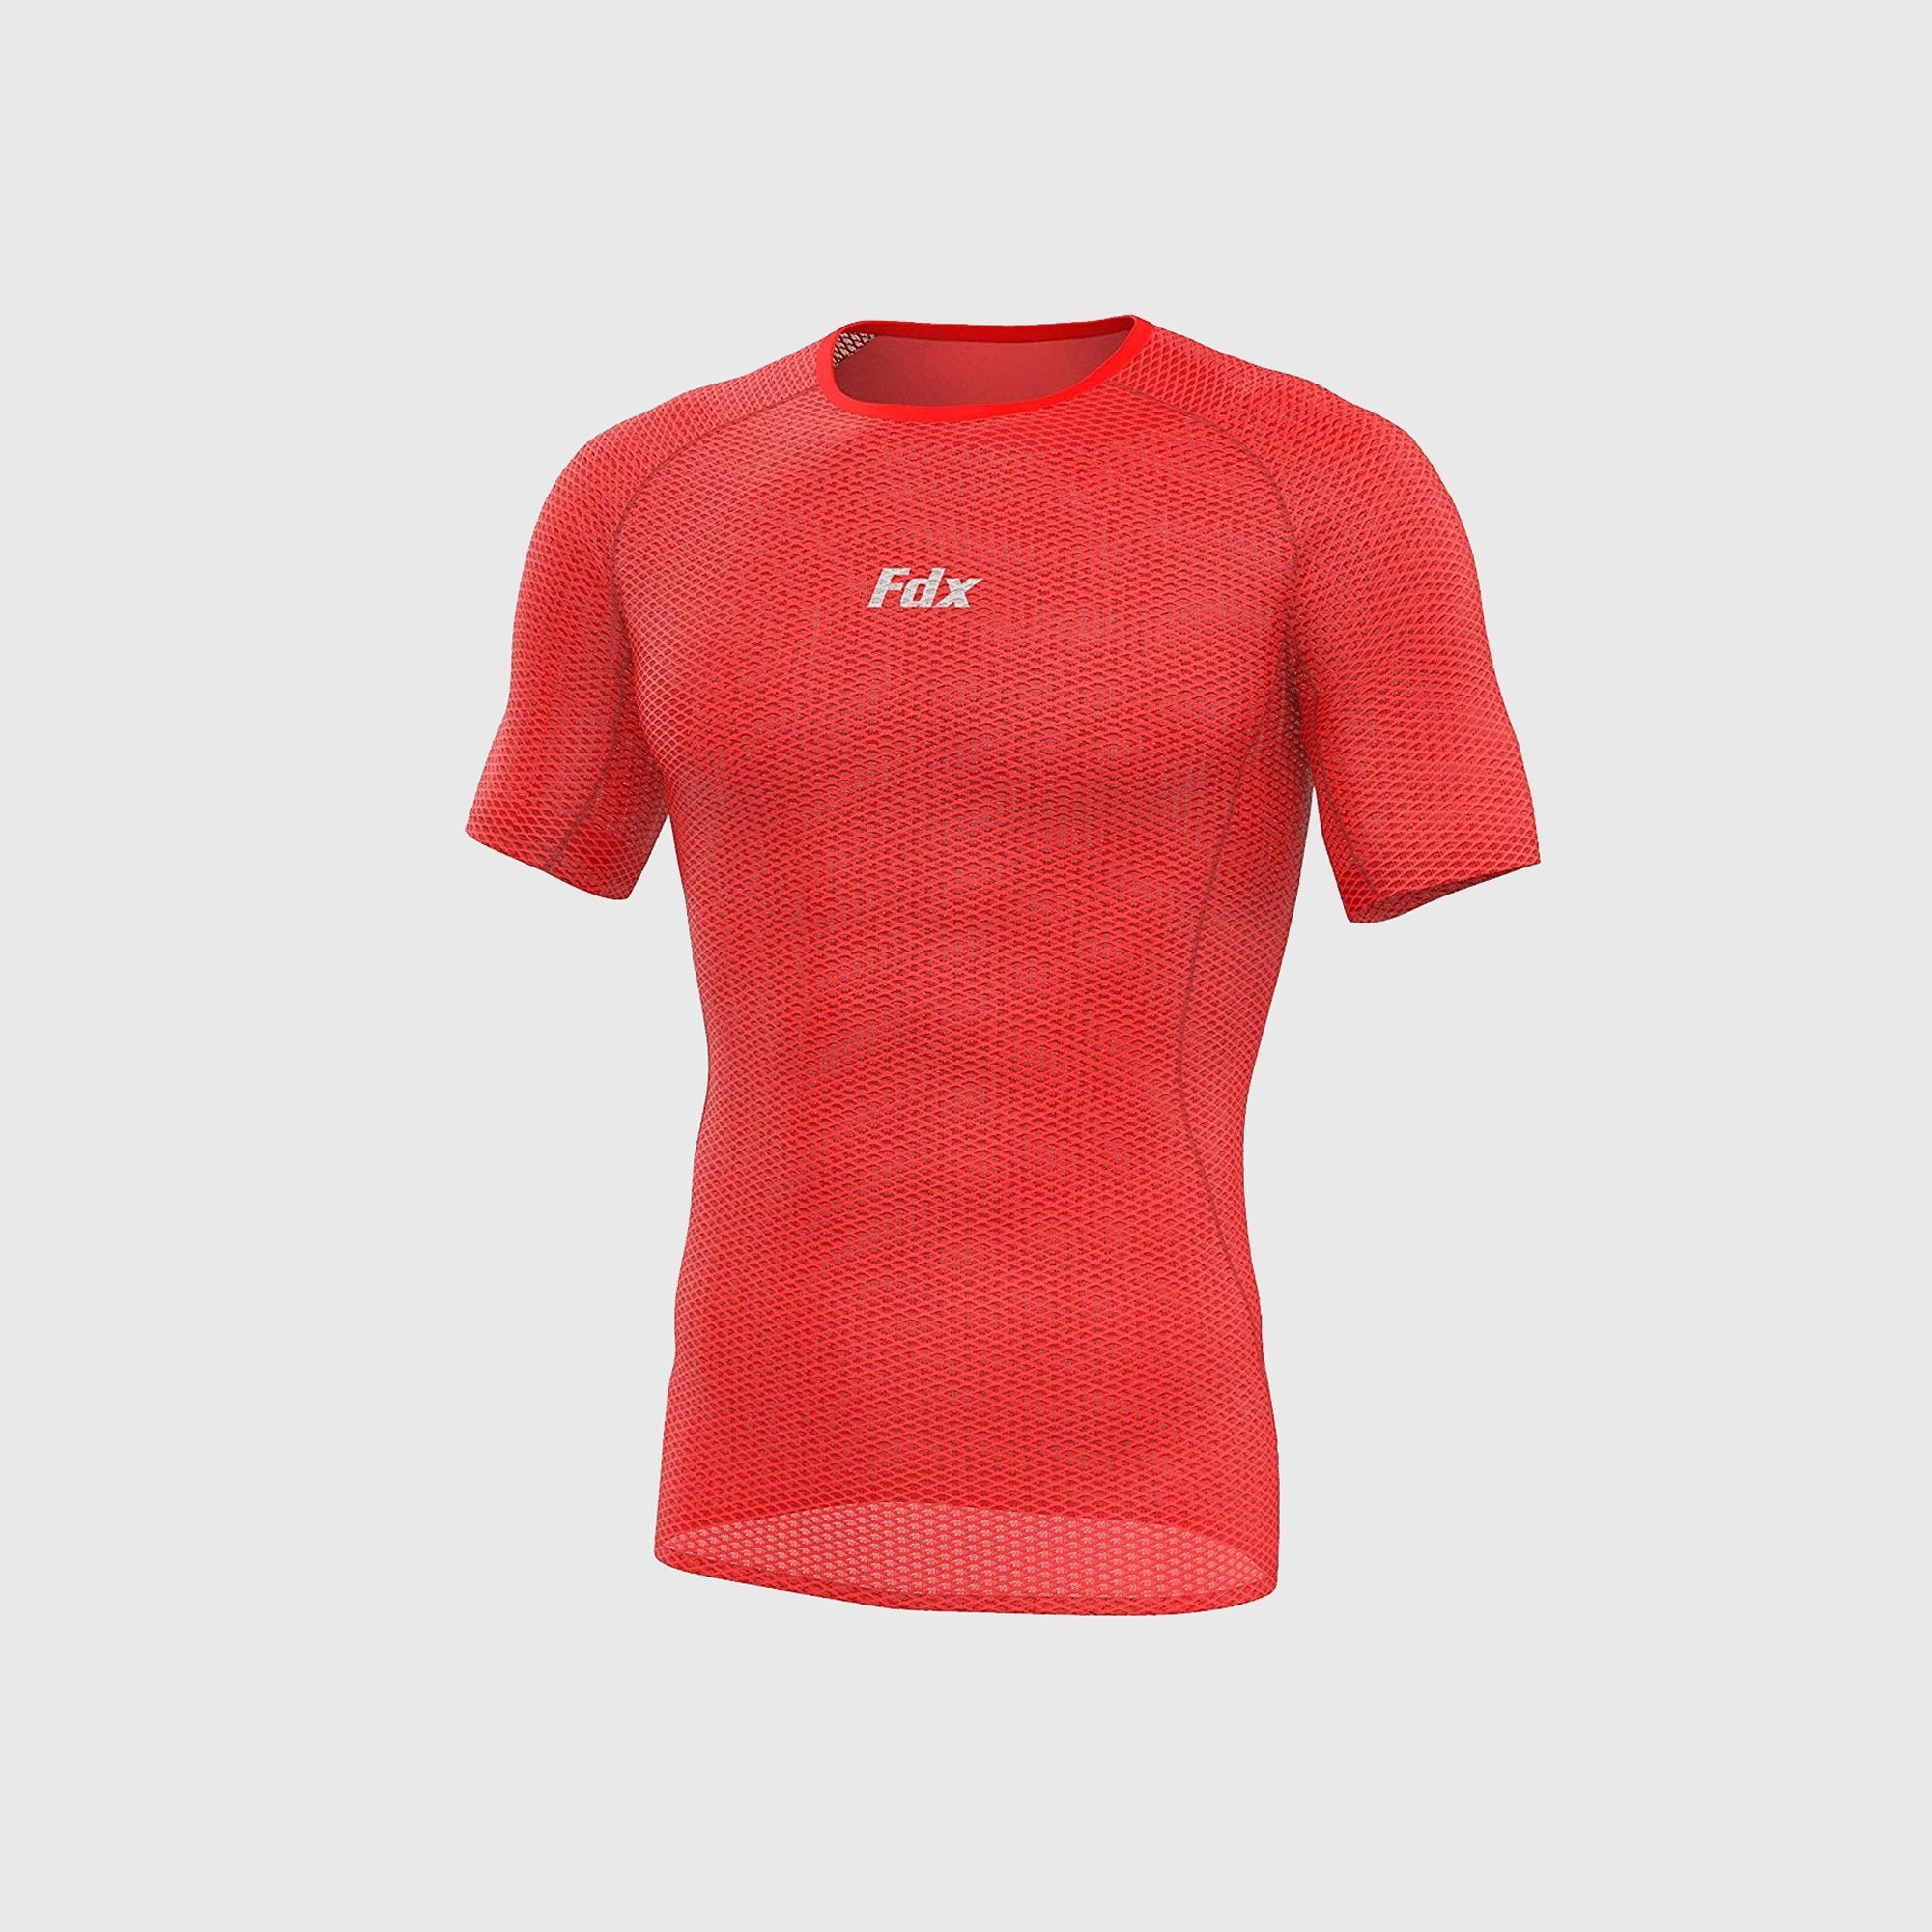 Fdx Aeroform Red Men's Short Sleeve Mesh Summer Cycling Top